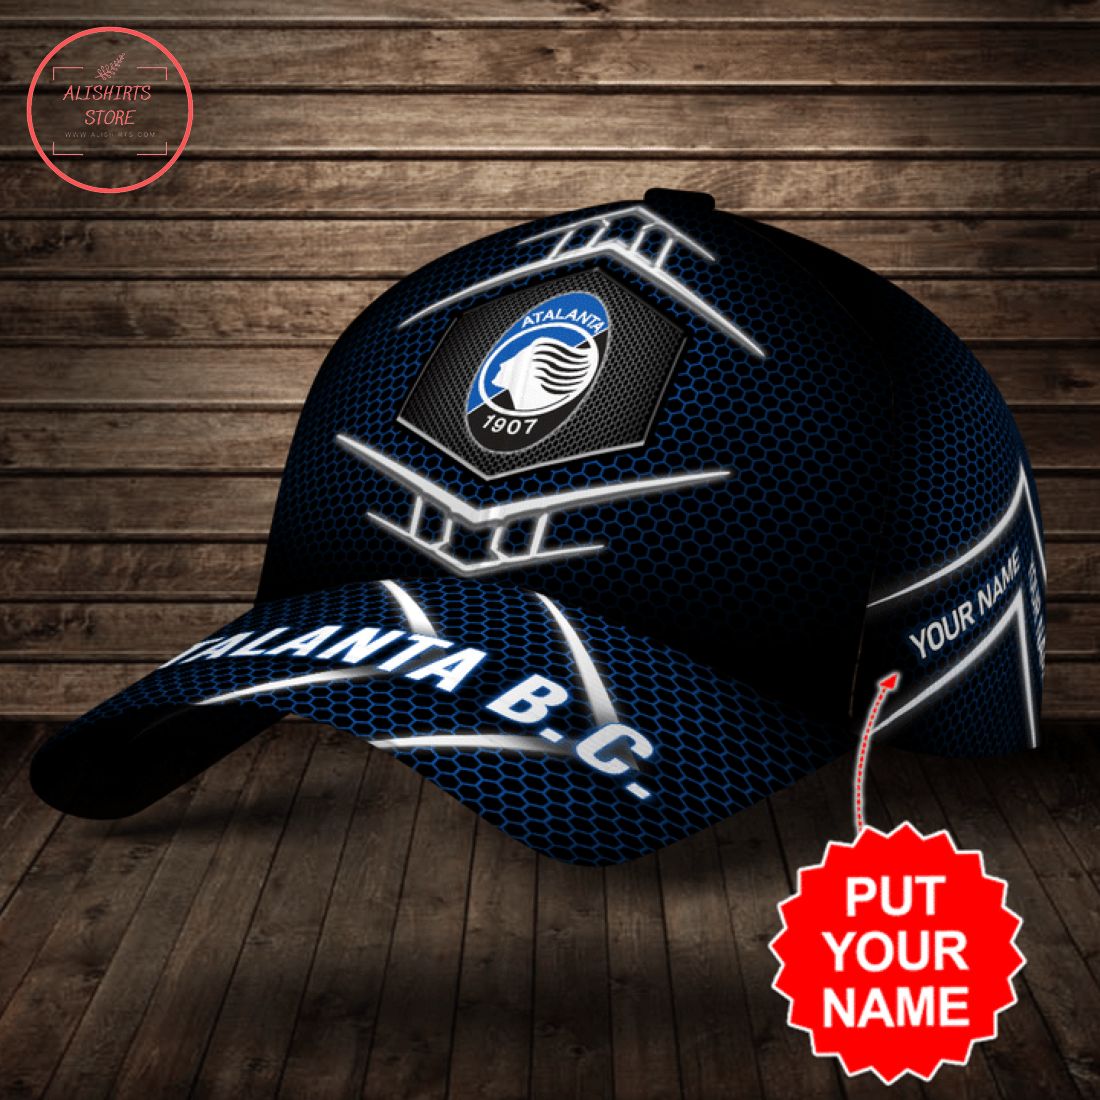 Atalanta FC Custom Name Classic Hat Cap